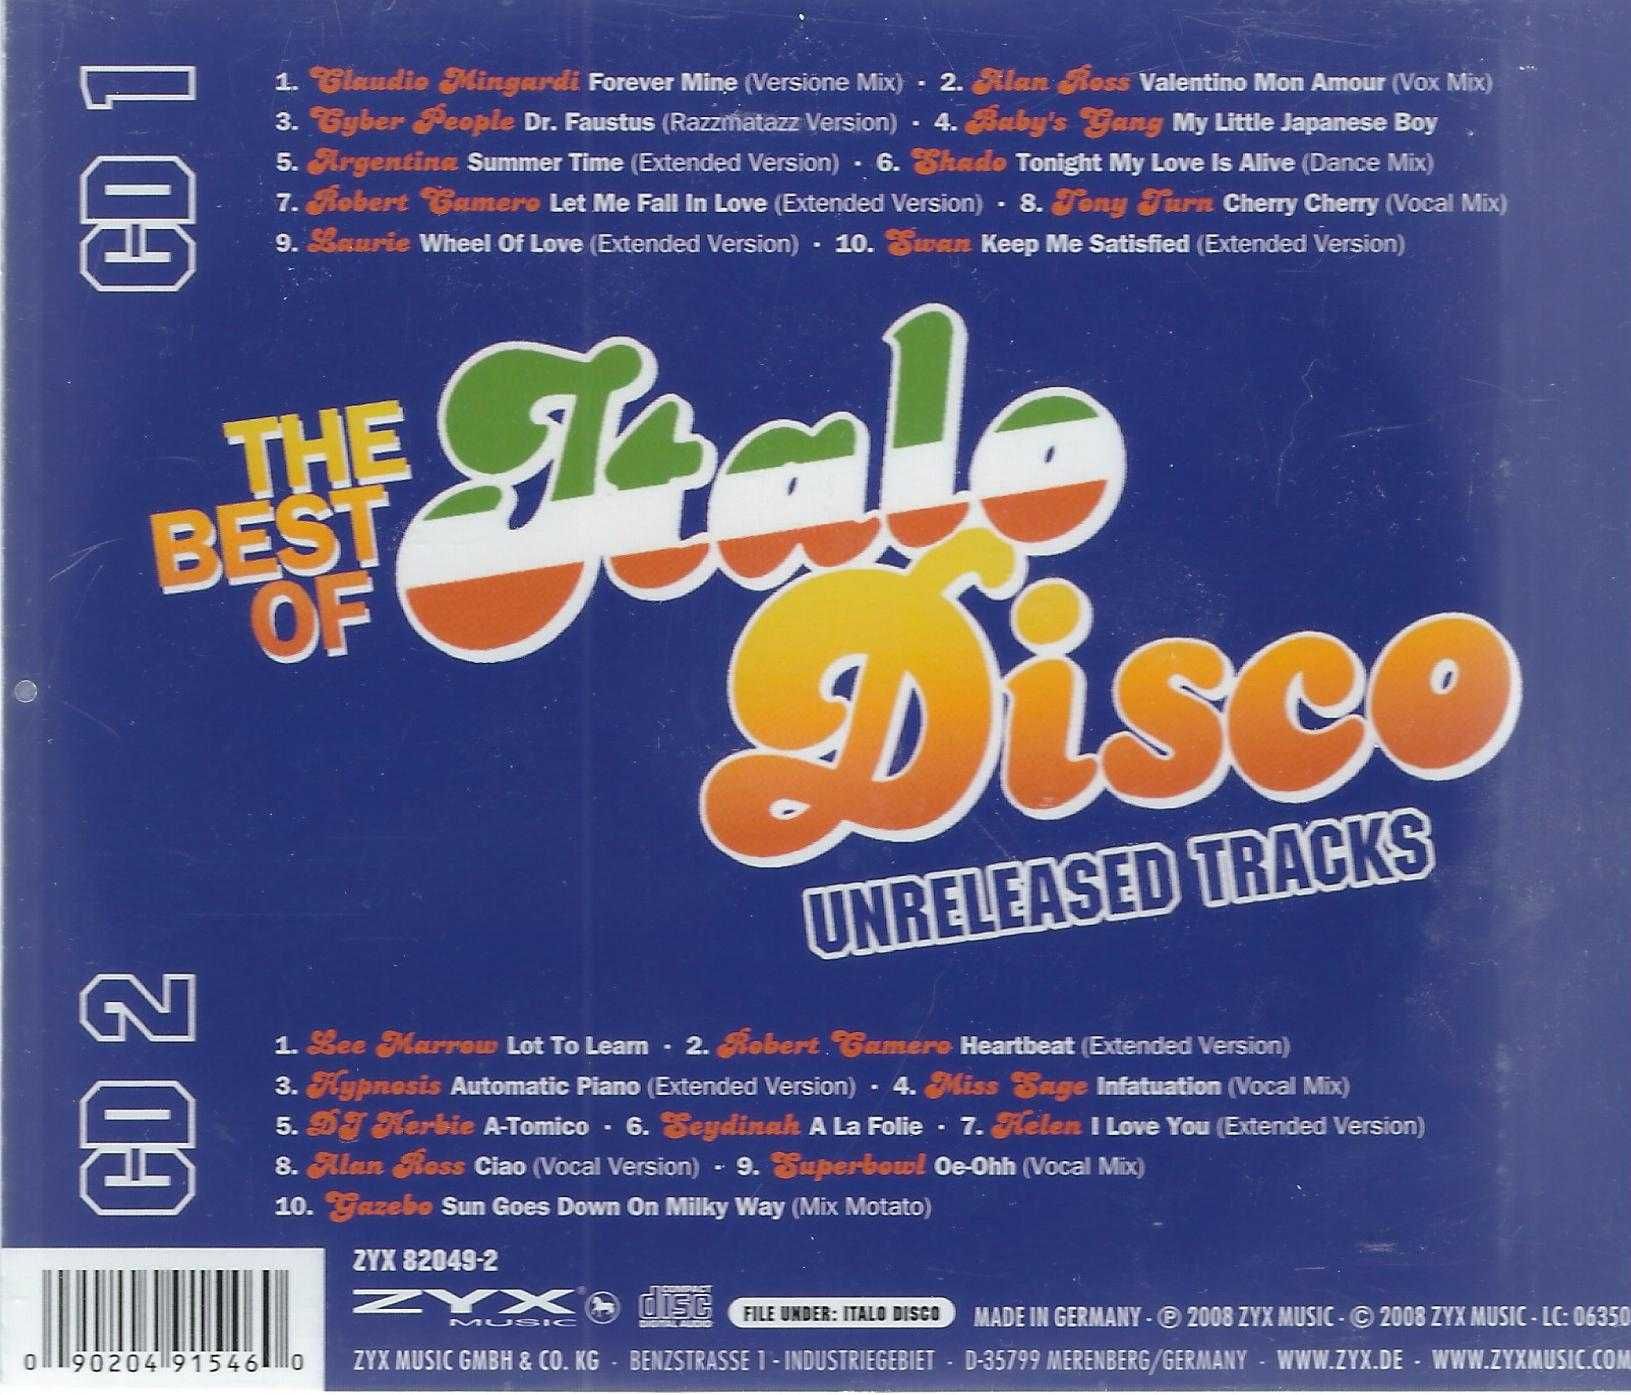 2CD VA - The Best Of Italo Disco-Unreleased Track (2008) (ZYX Music)